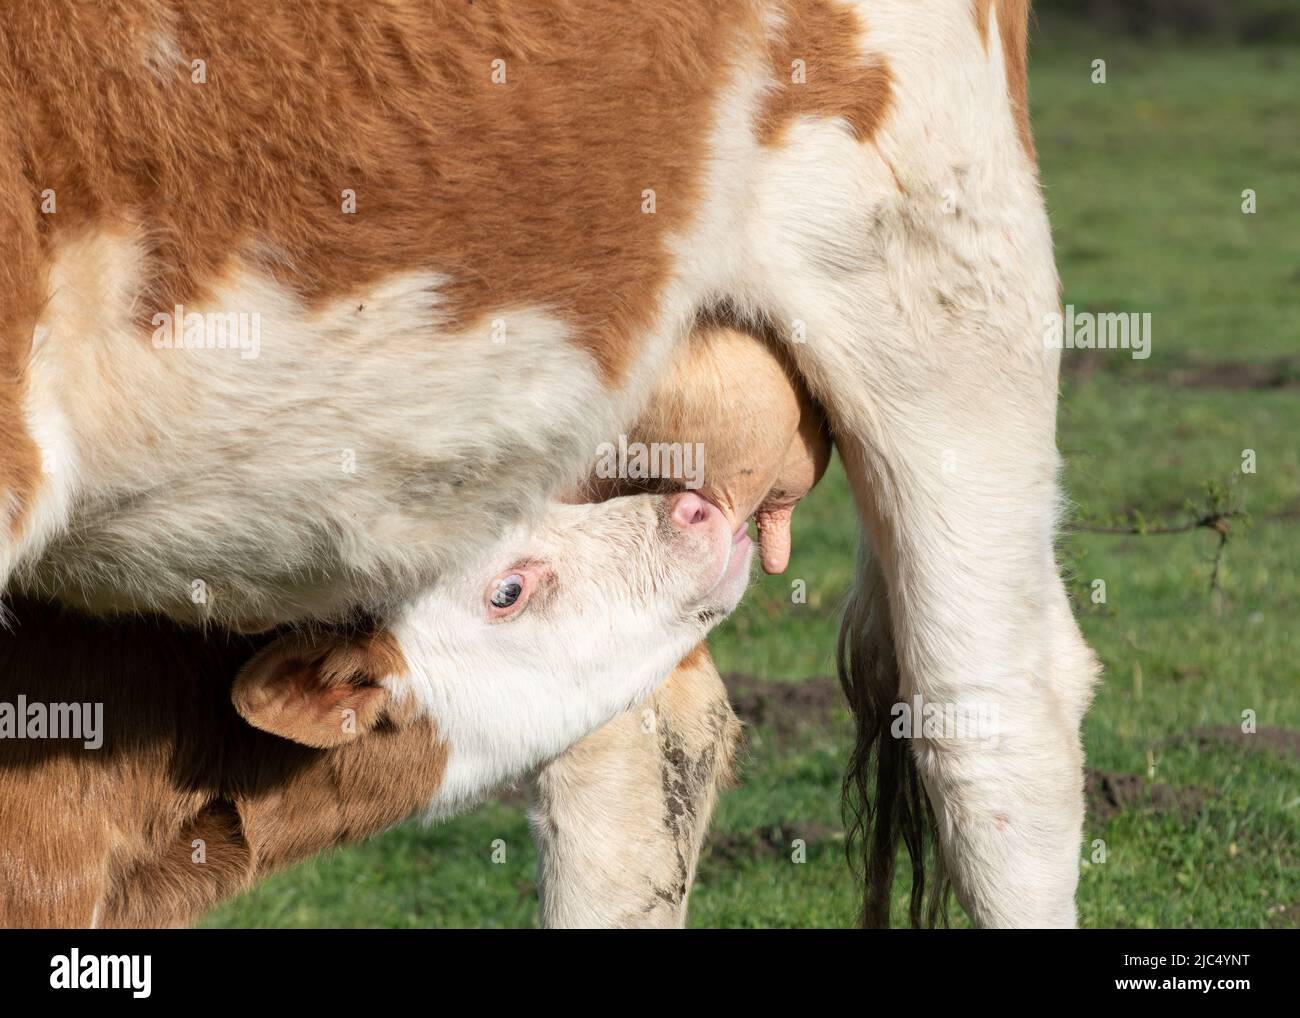 Kalb trinke Milch aus der Nähe des Euters, Kuh säugen Kalb Stockfoto